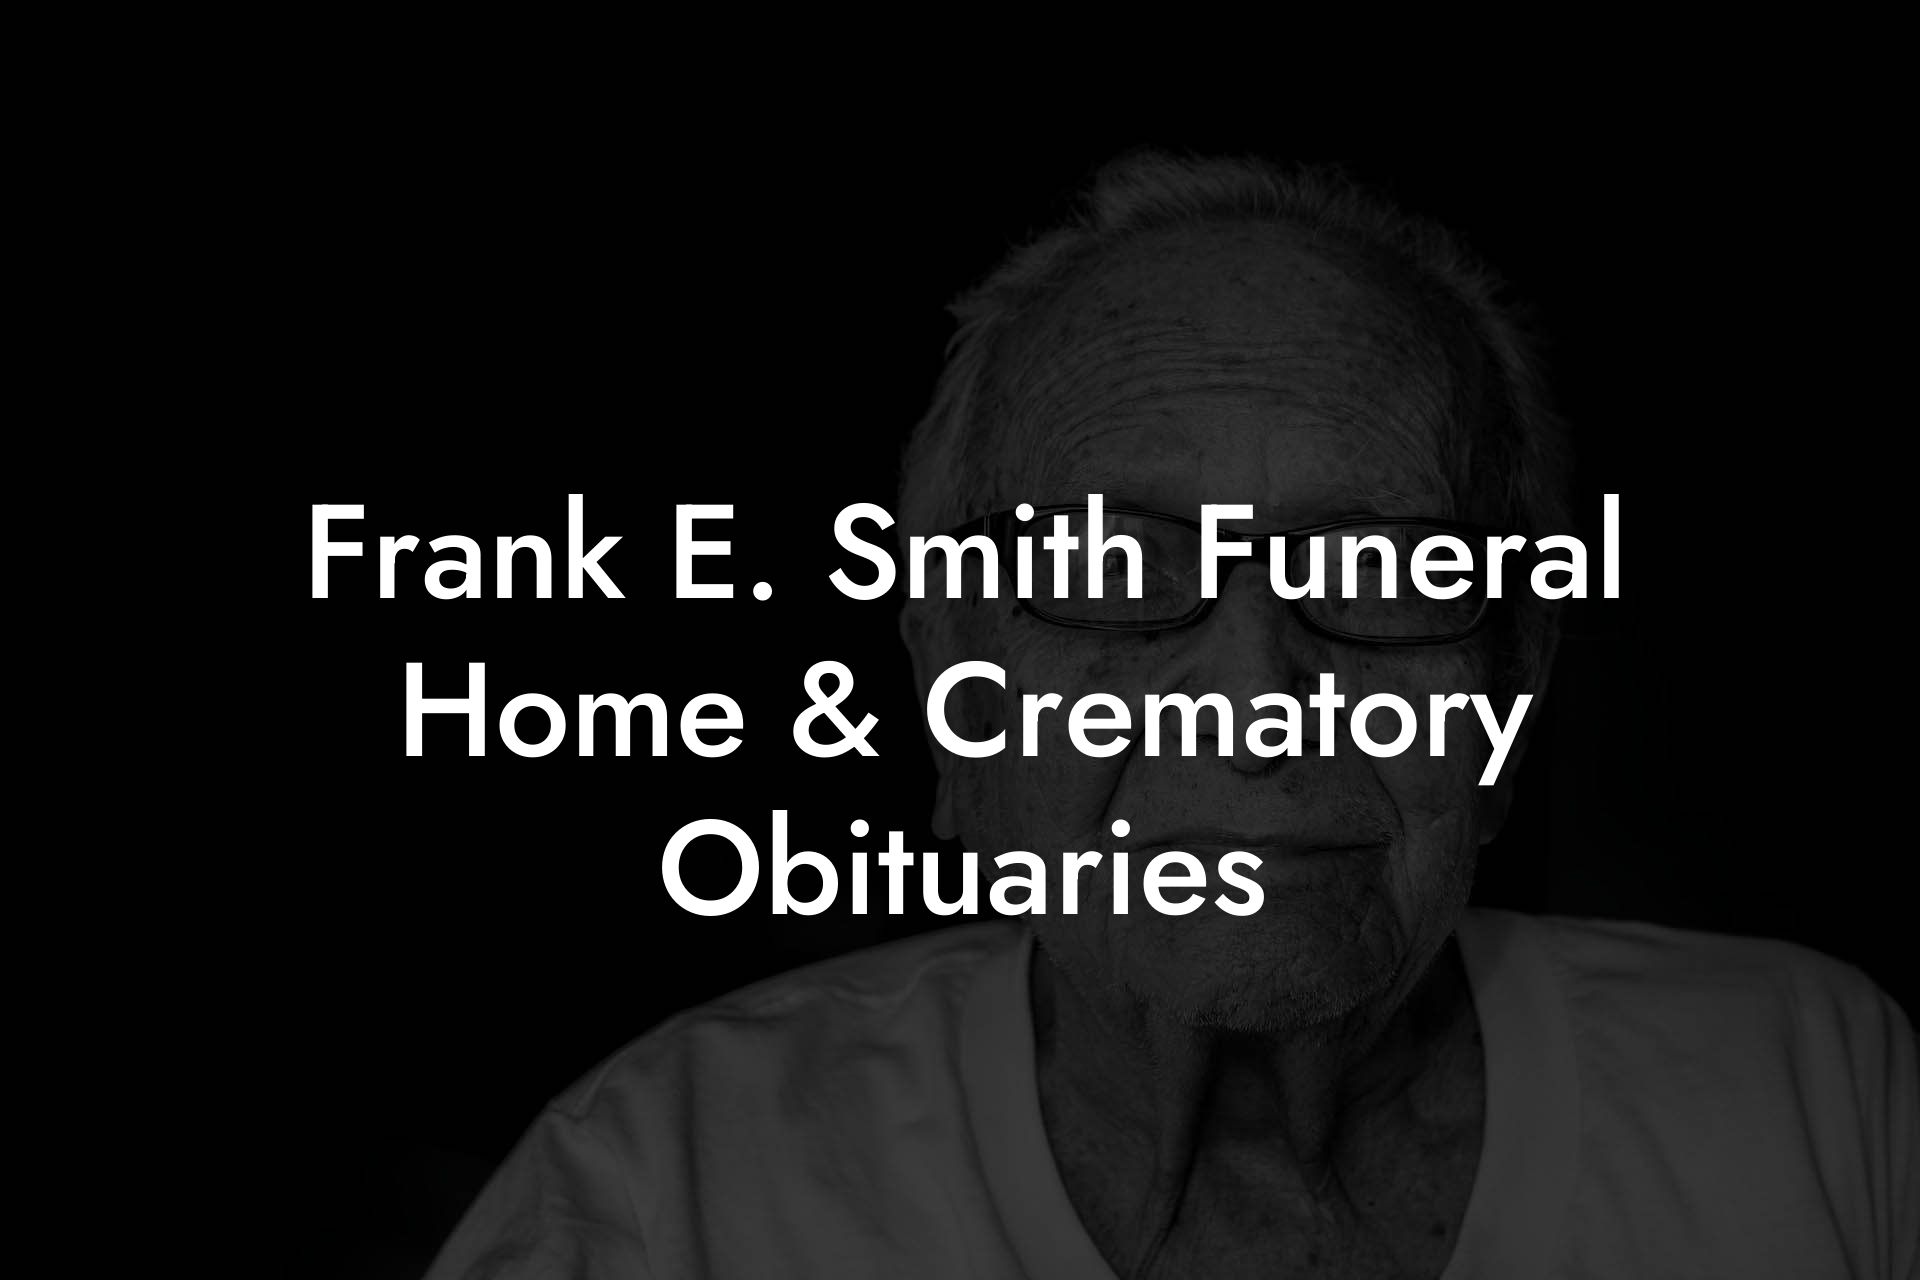 Frank E. Smith Funeral Home & Crematory Obituaries